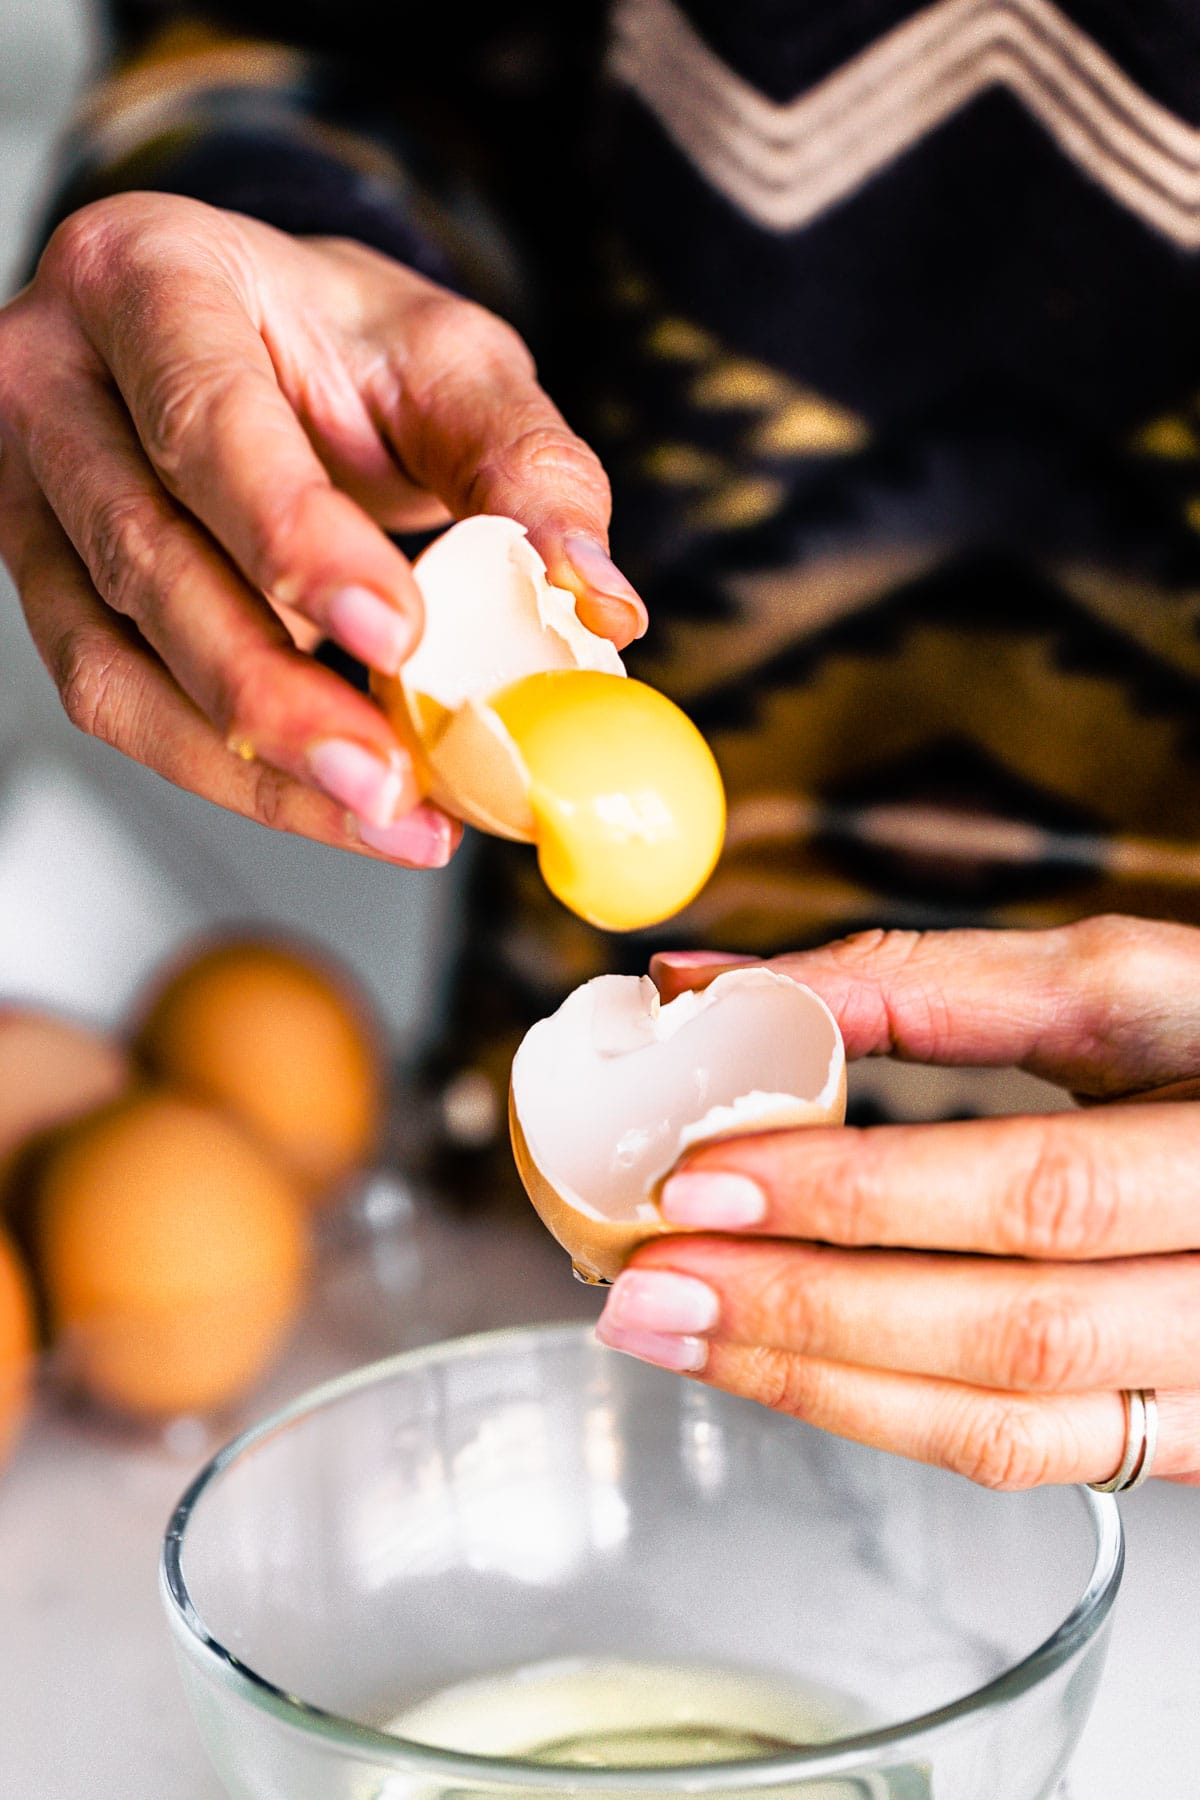 woman holding cracked egg and separating egg yolk